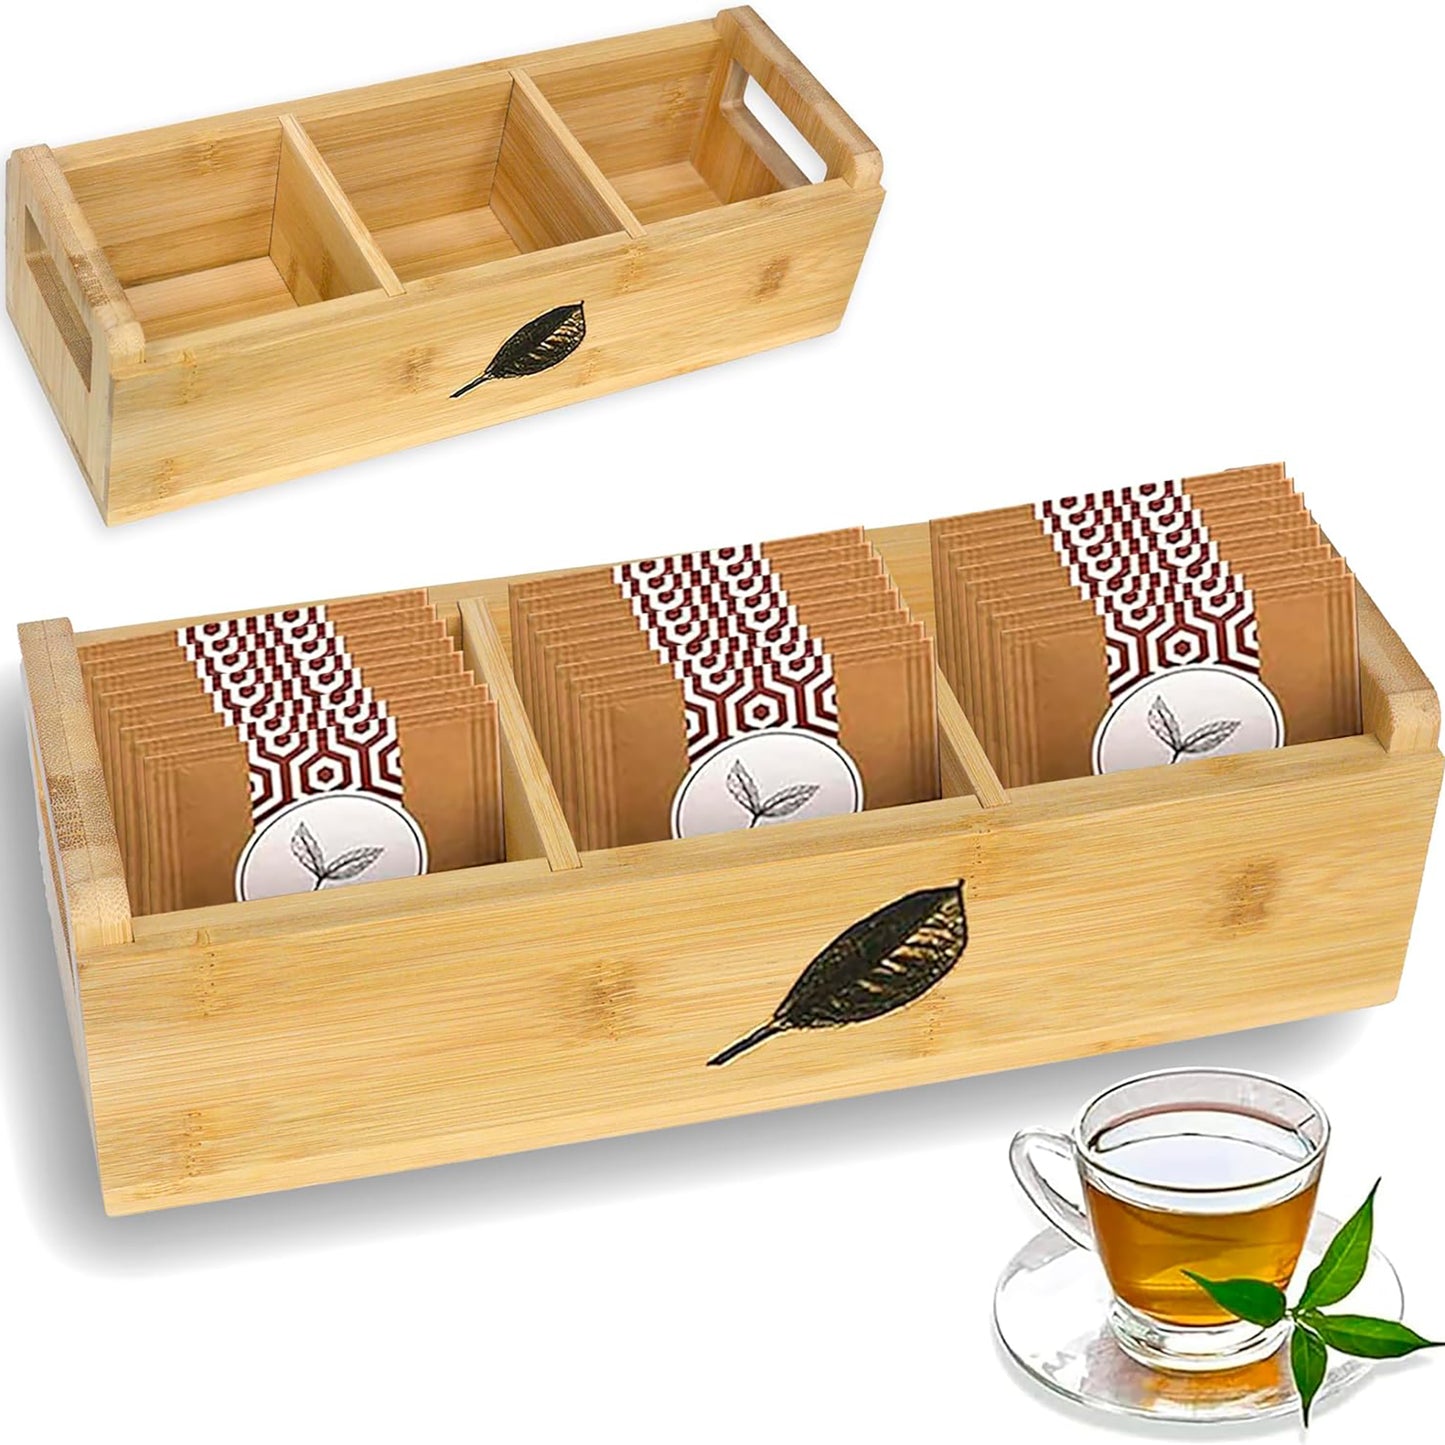 Bamboo Tea Organizer Caddy 3-Slot Countertop Display, Storage with Adjustable/Removable Slots | Minimalist, Purposeful Design & Thoughtful Gift Idea